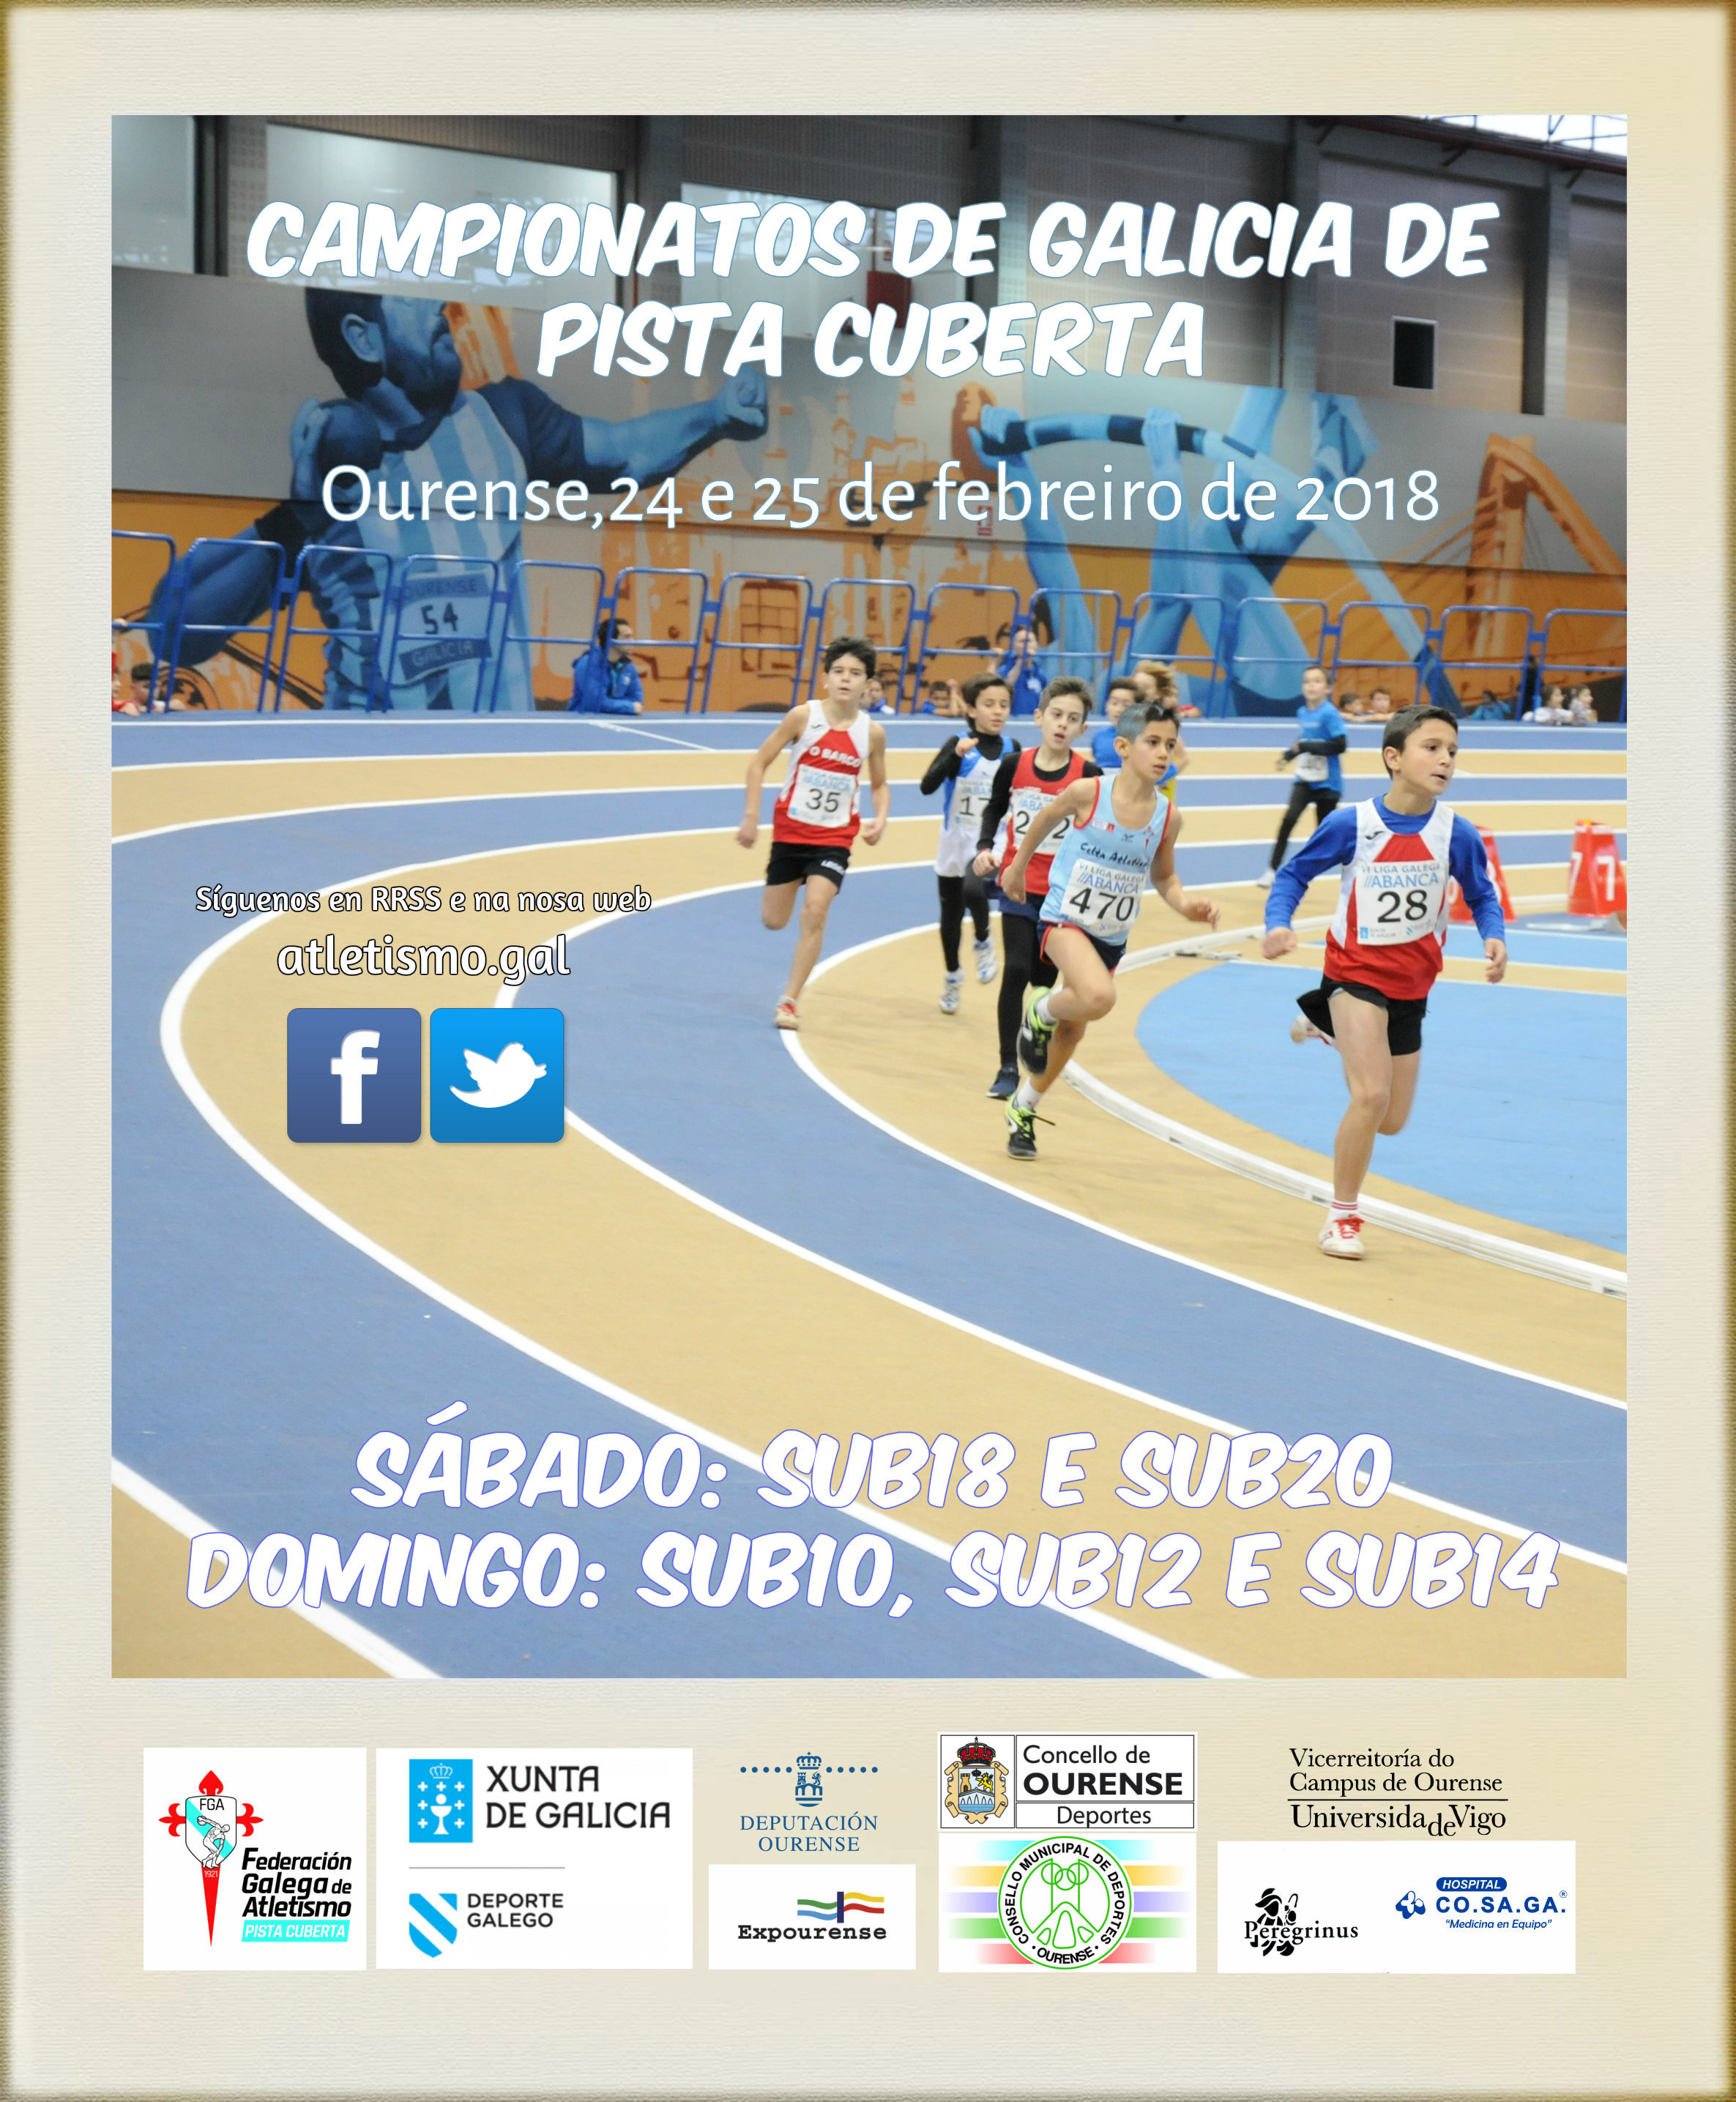 LXI Campionato de Galicia Sub18(XUV) e XL Campionato de Galicia Sub20(JUN) de Pista Cuberta